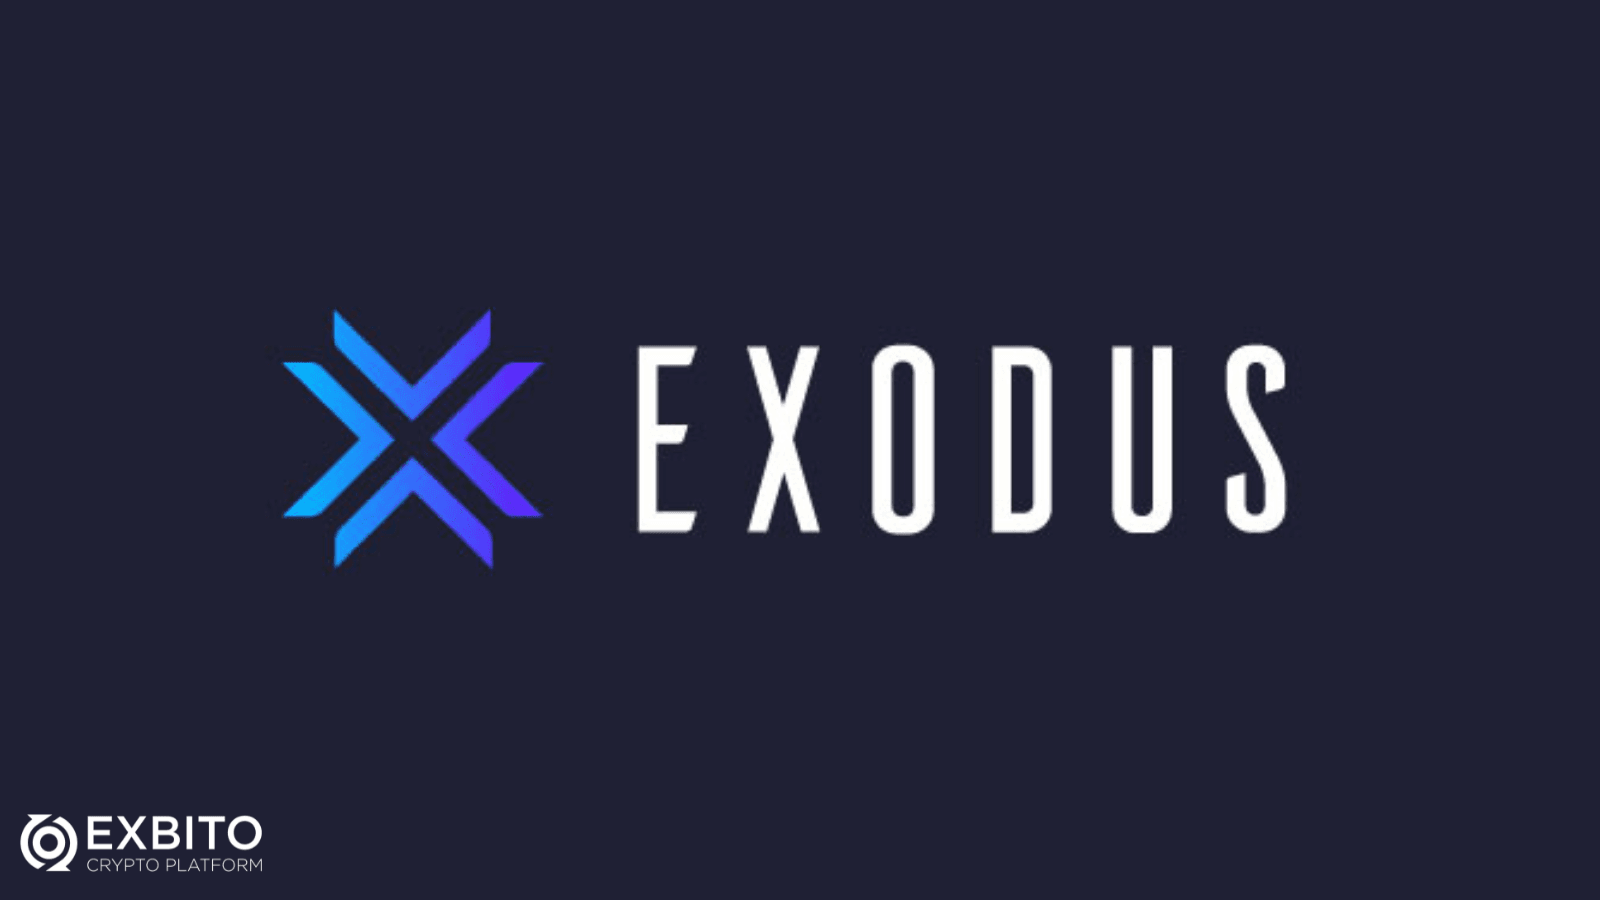  اکسودوس (Exodus)